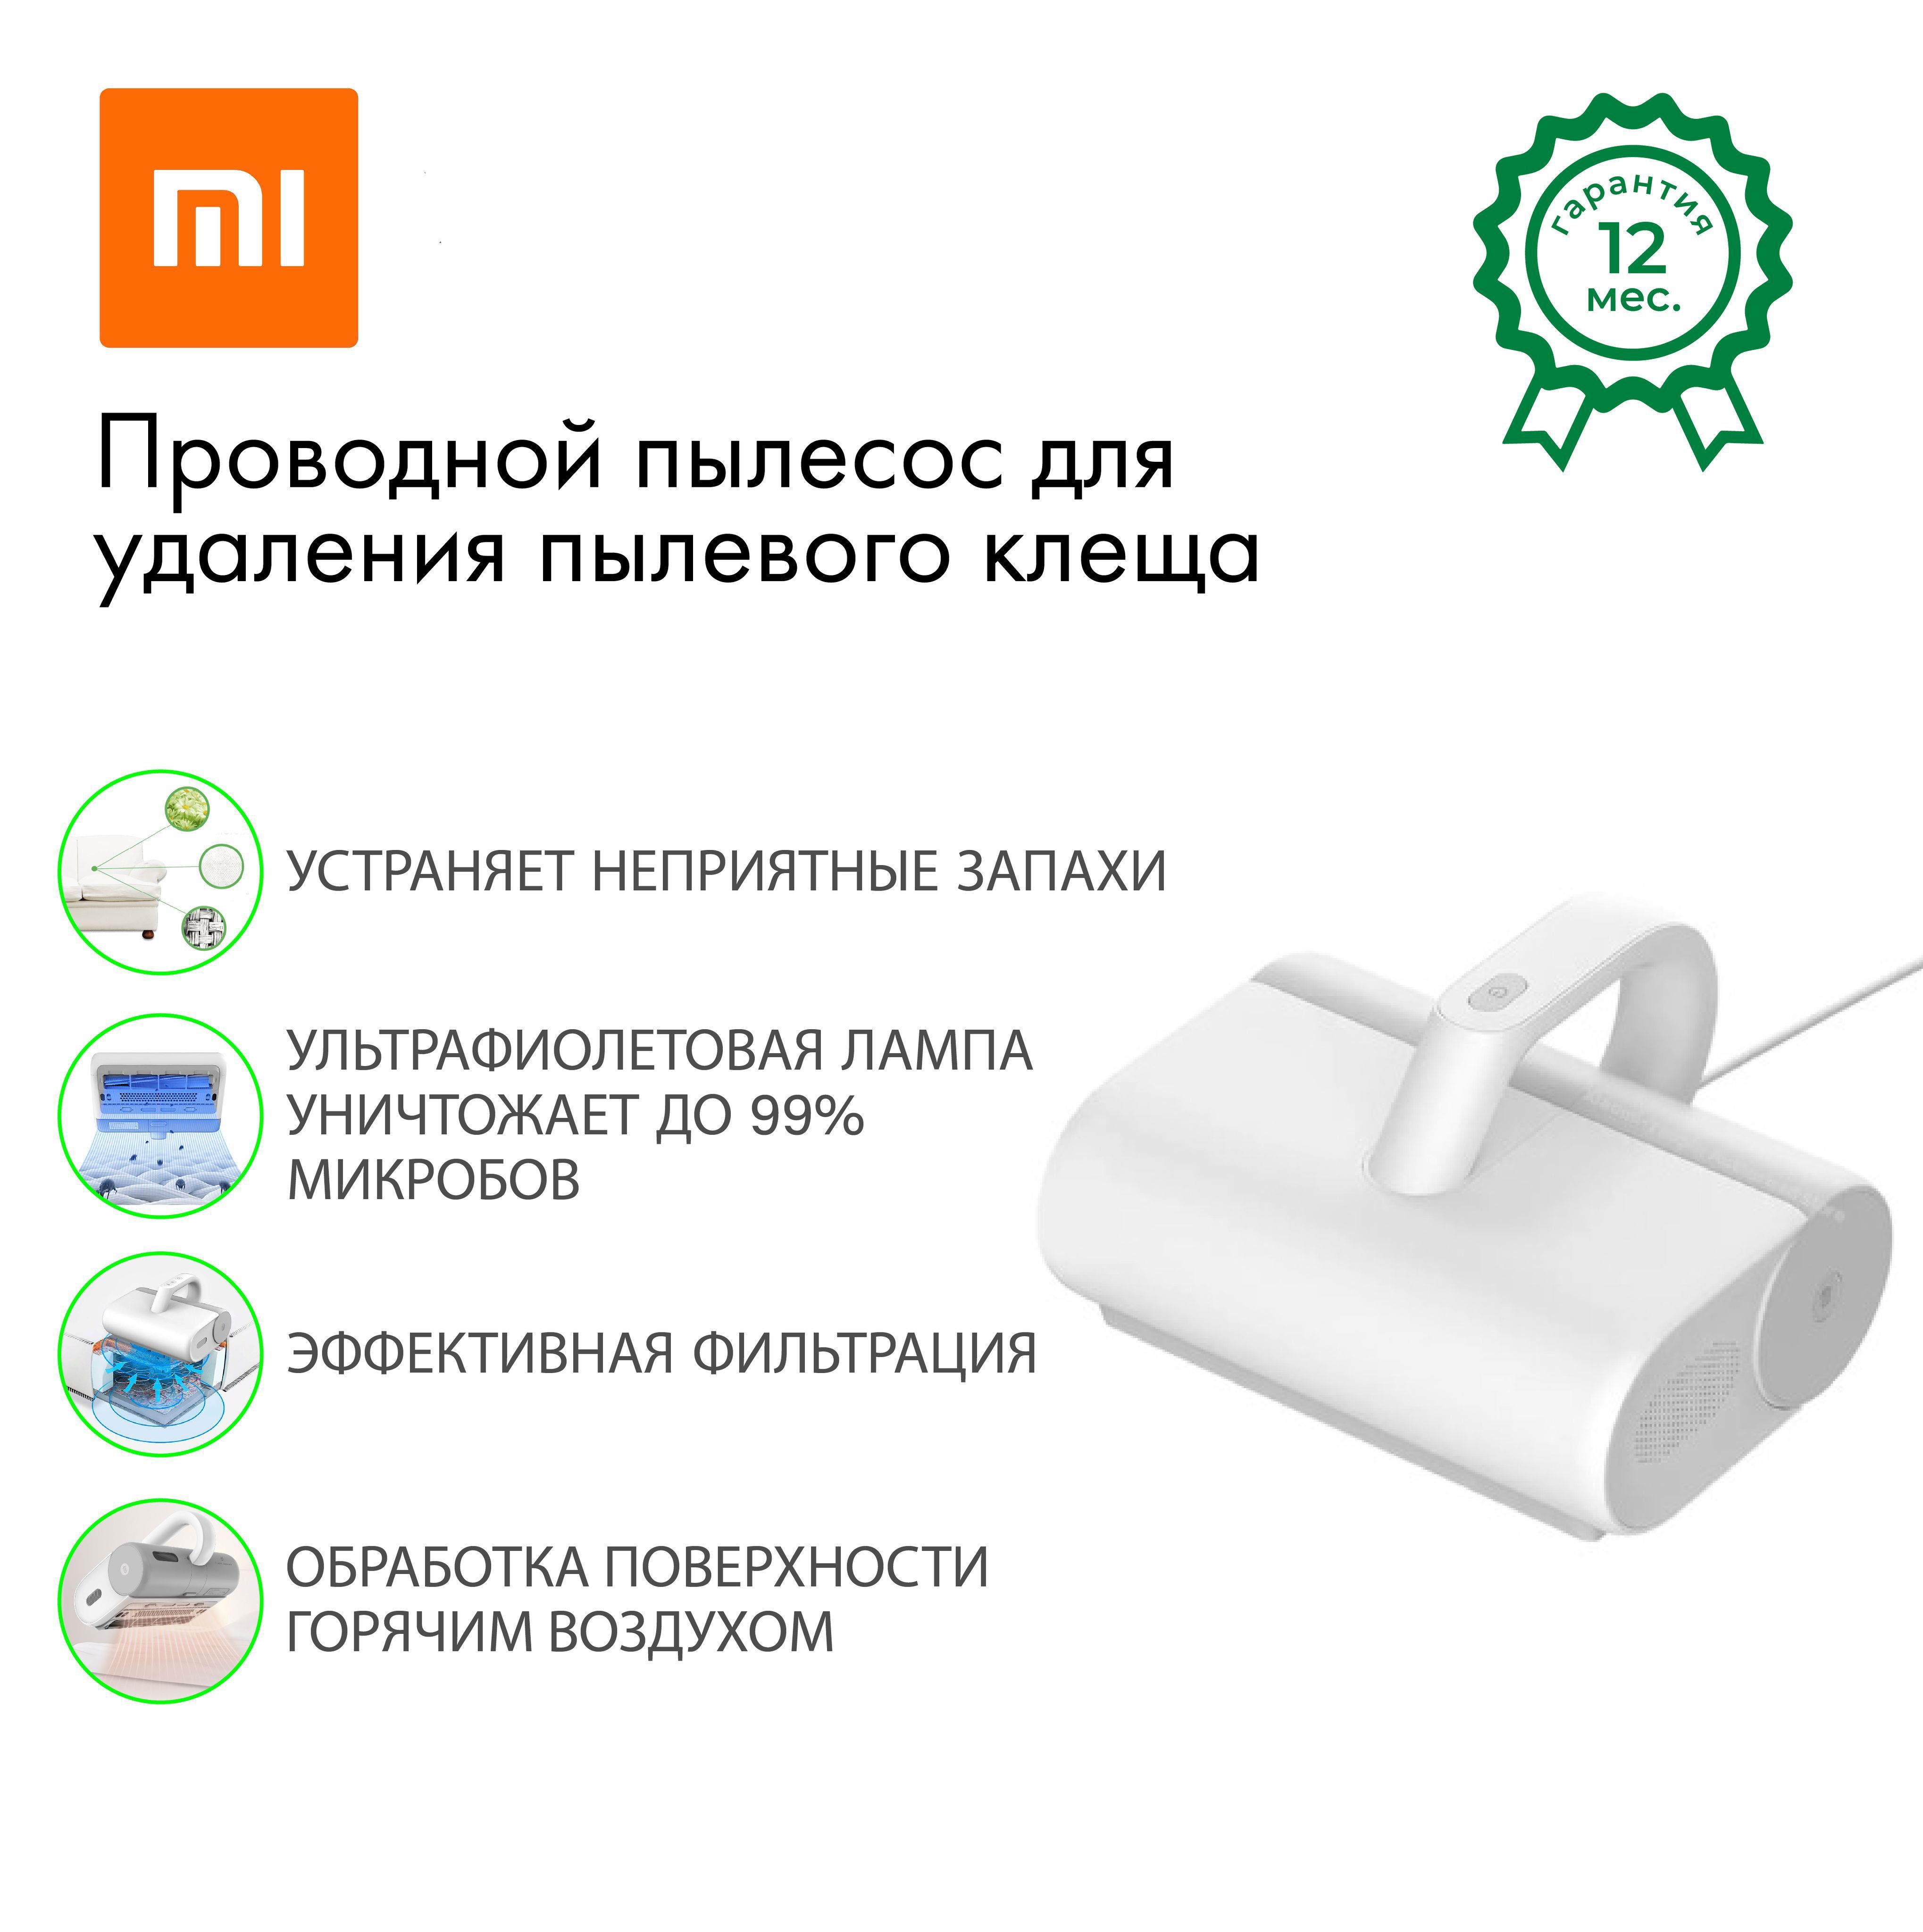 Mjcmy01dy dust mite vacuum cleaner. Пылесос Xiaomi (mjcmy01dy). Xiaomi Dust Mite Vacuum. Xiaomi Dust Mite Vacuum вилка. Пылесос для удаления пылевого клеща.